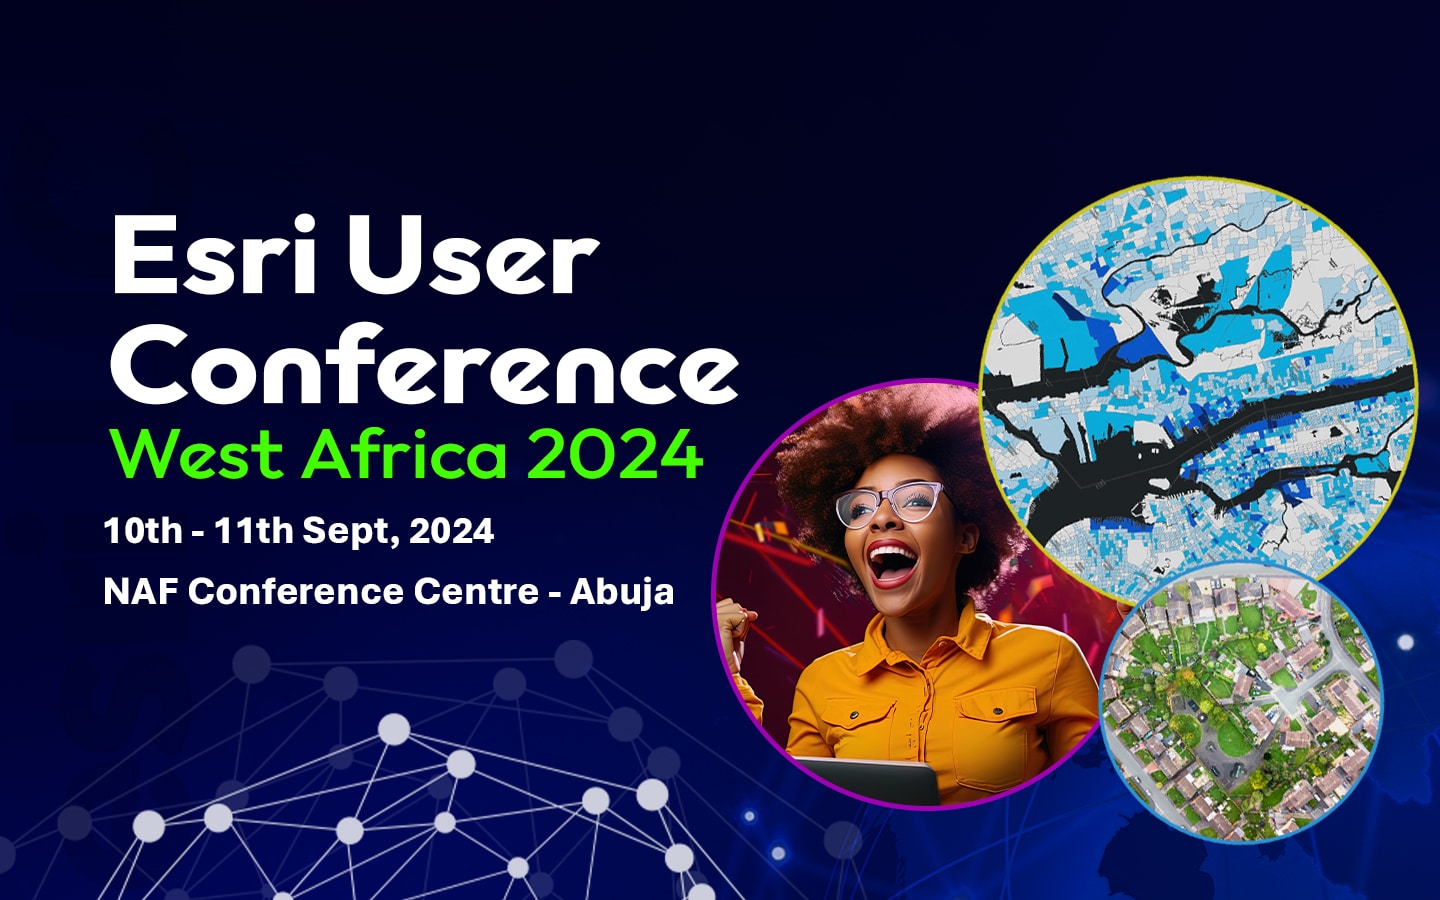 Esri User Conference - West Africa 2024